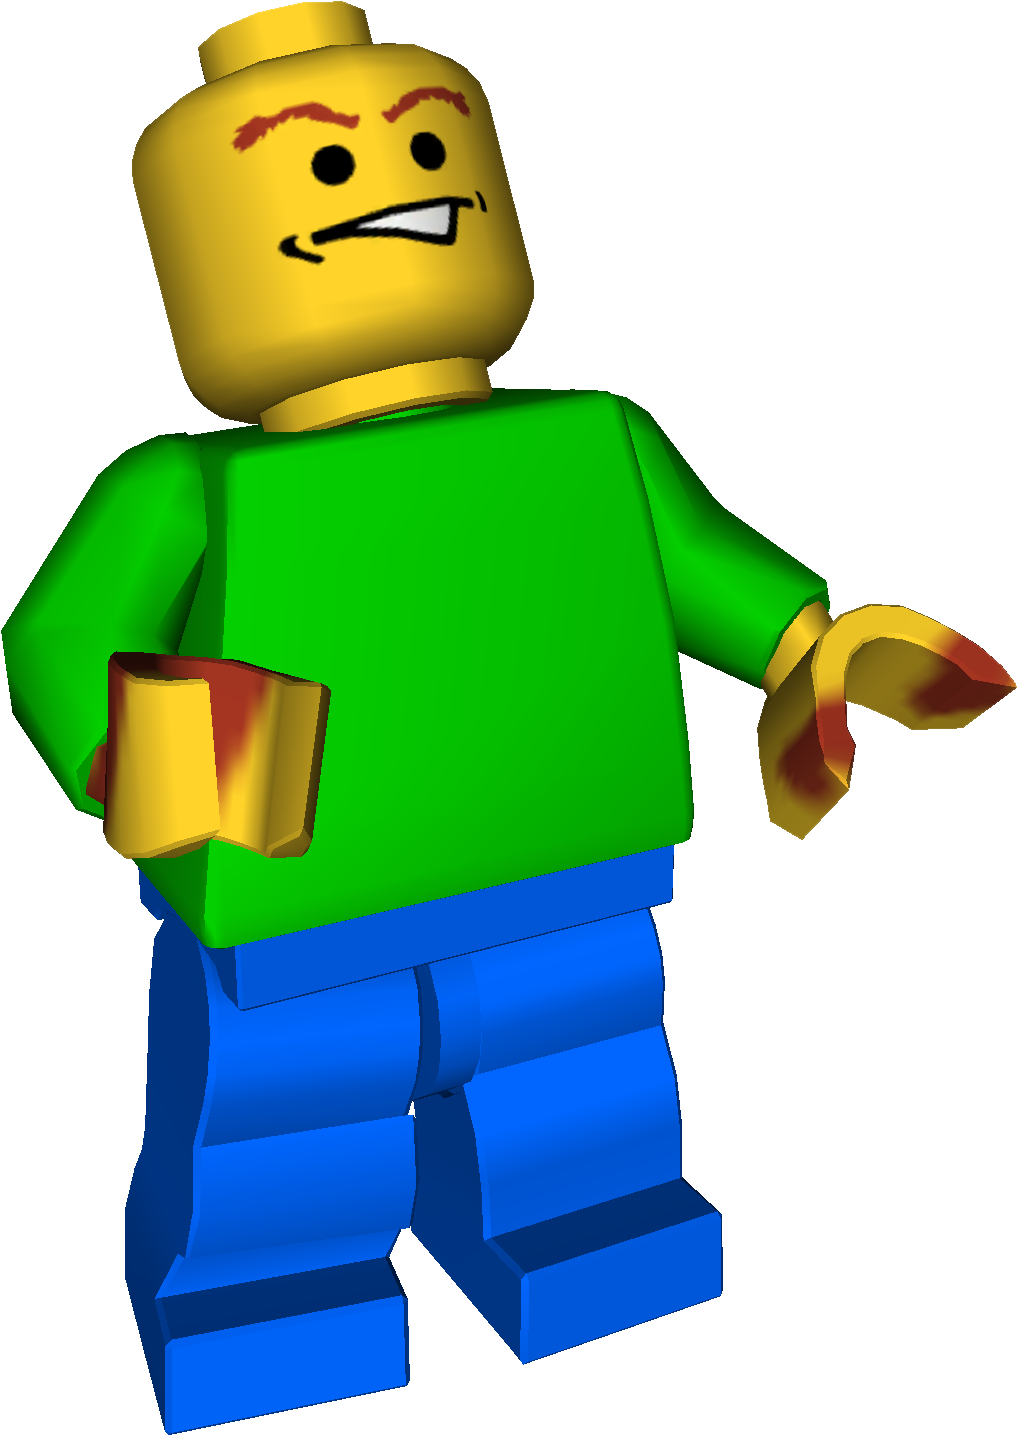 Smiling Lego Figure3 D Model